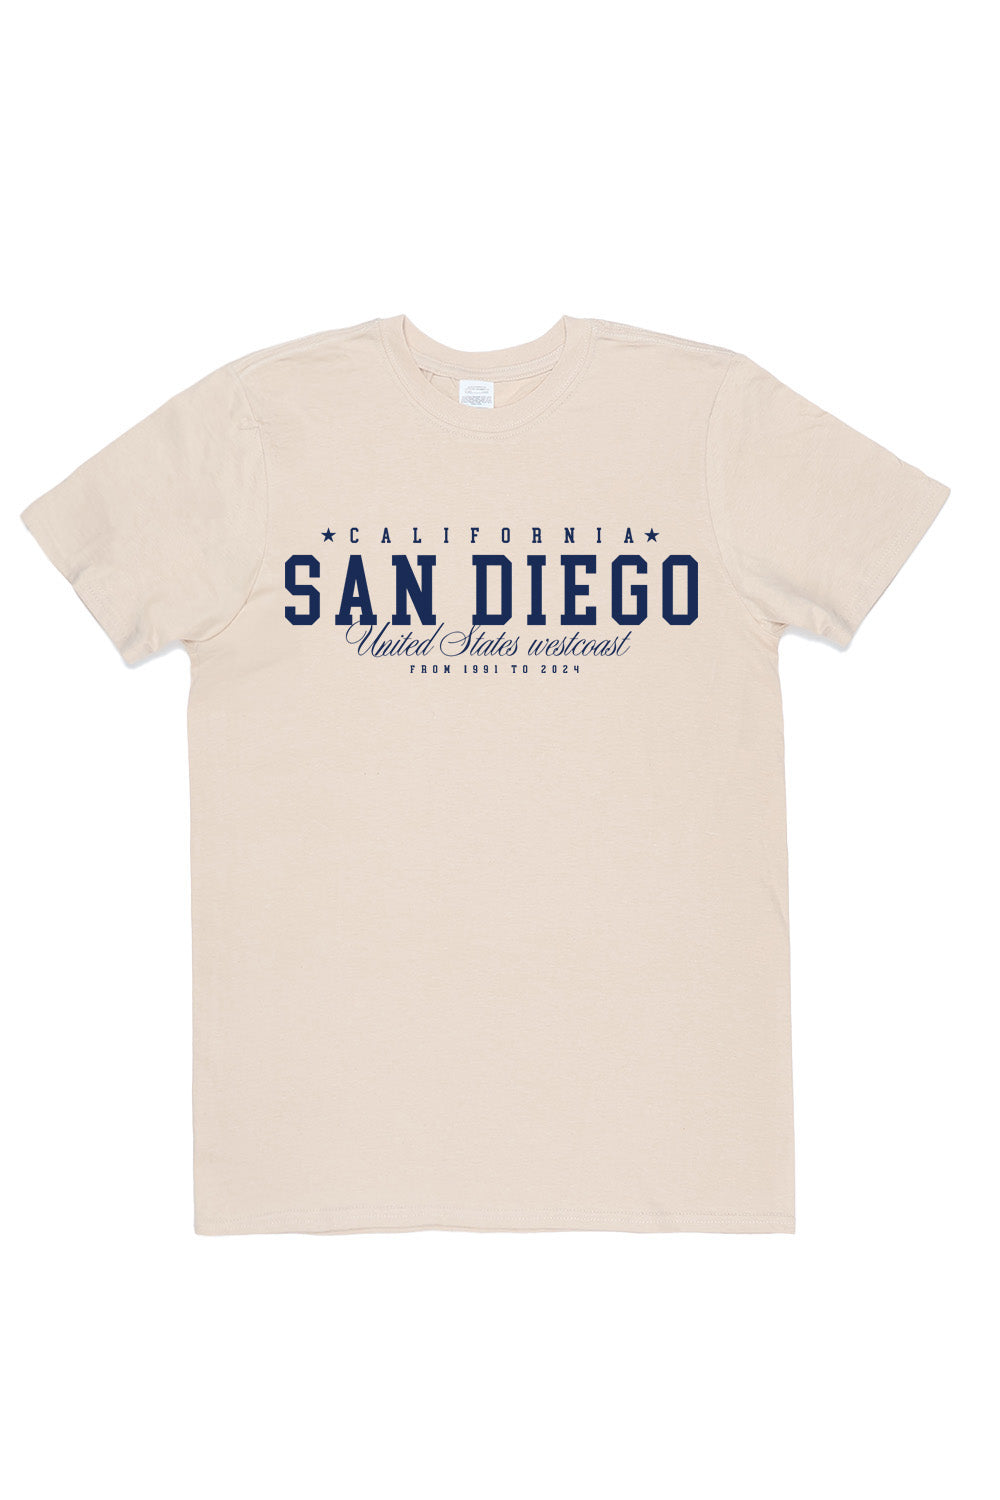 San Diego T-Shirt in Sand (Custom Packs)